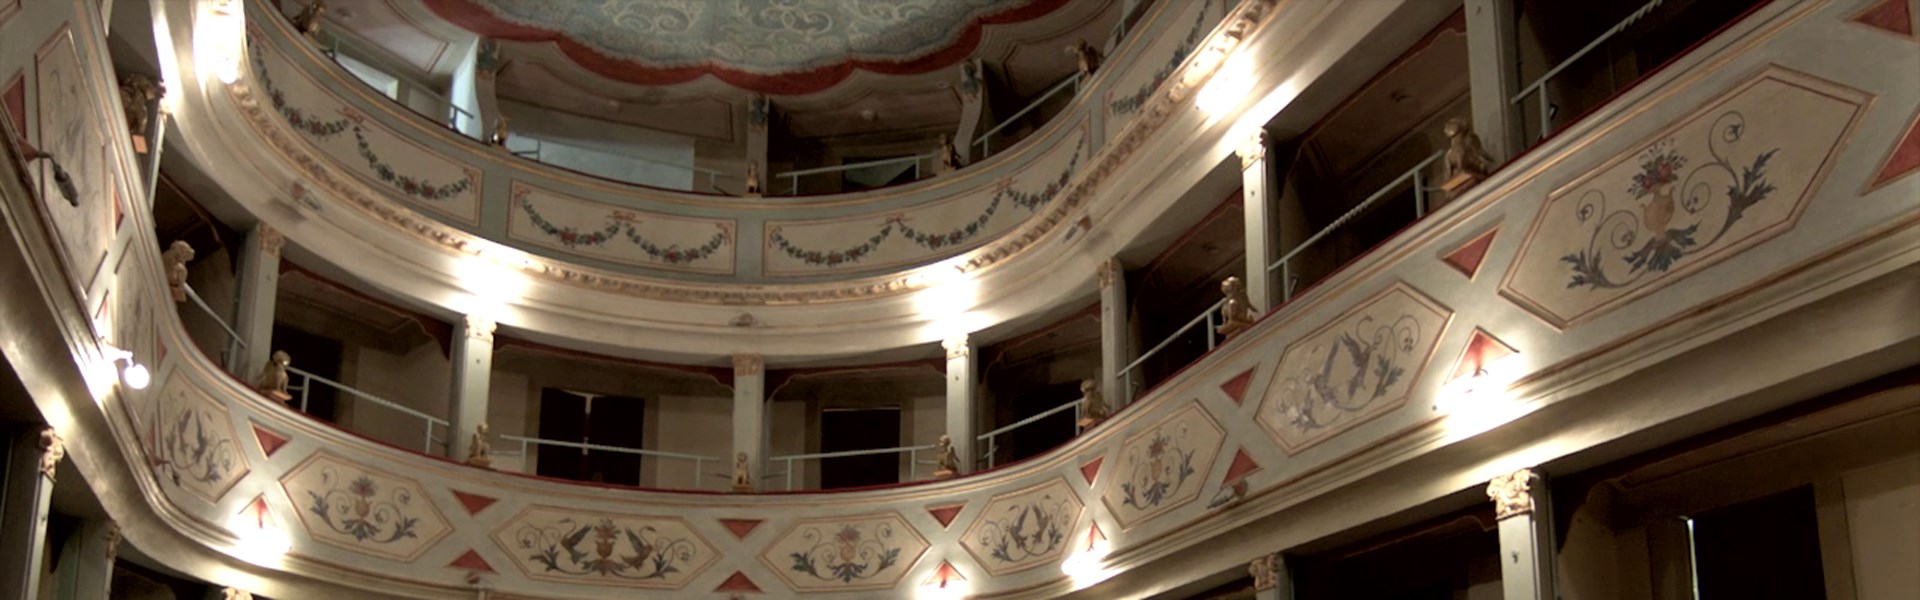 Mondavio - Teatro Apollo